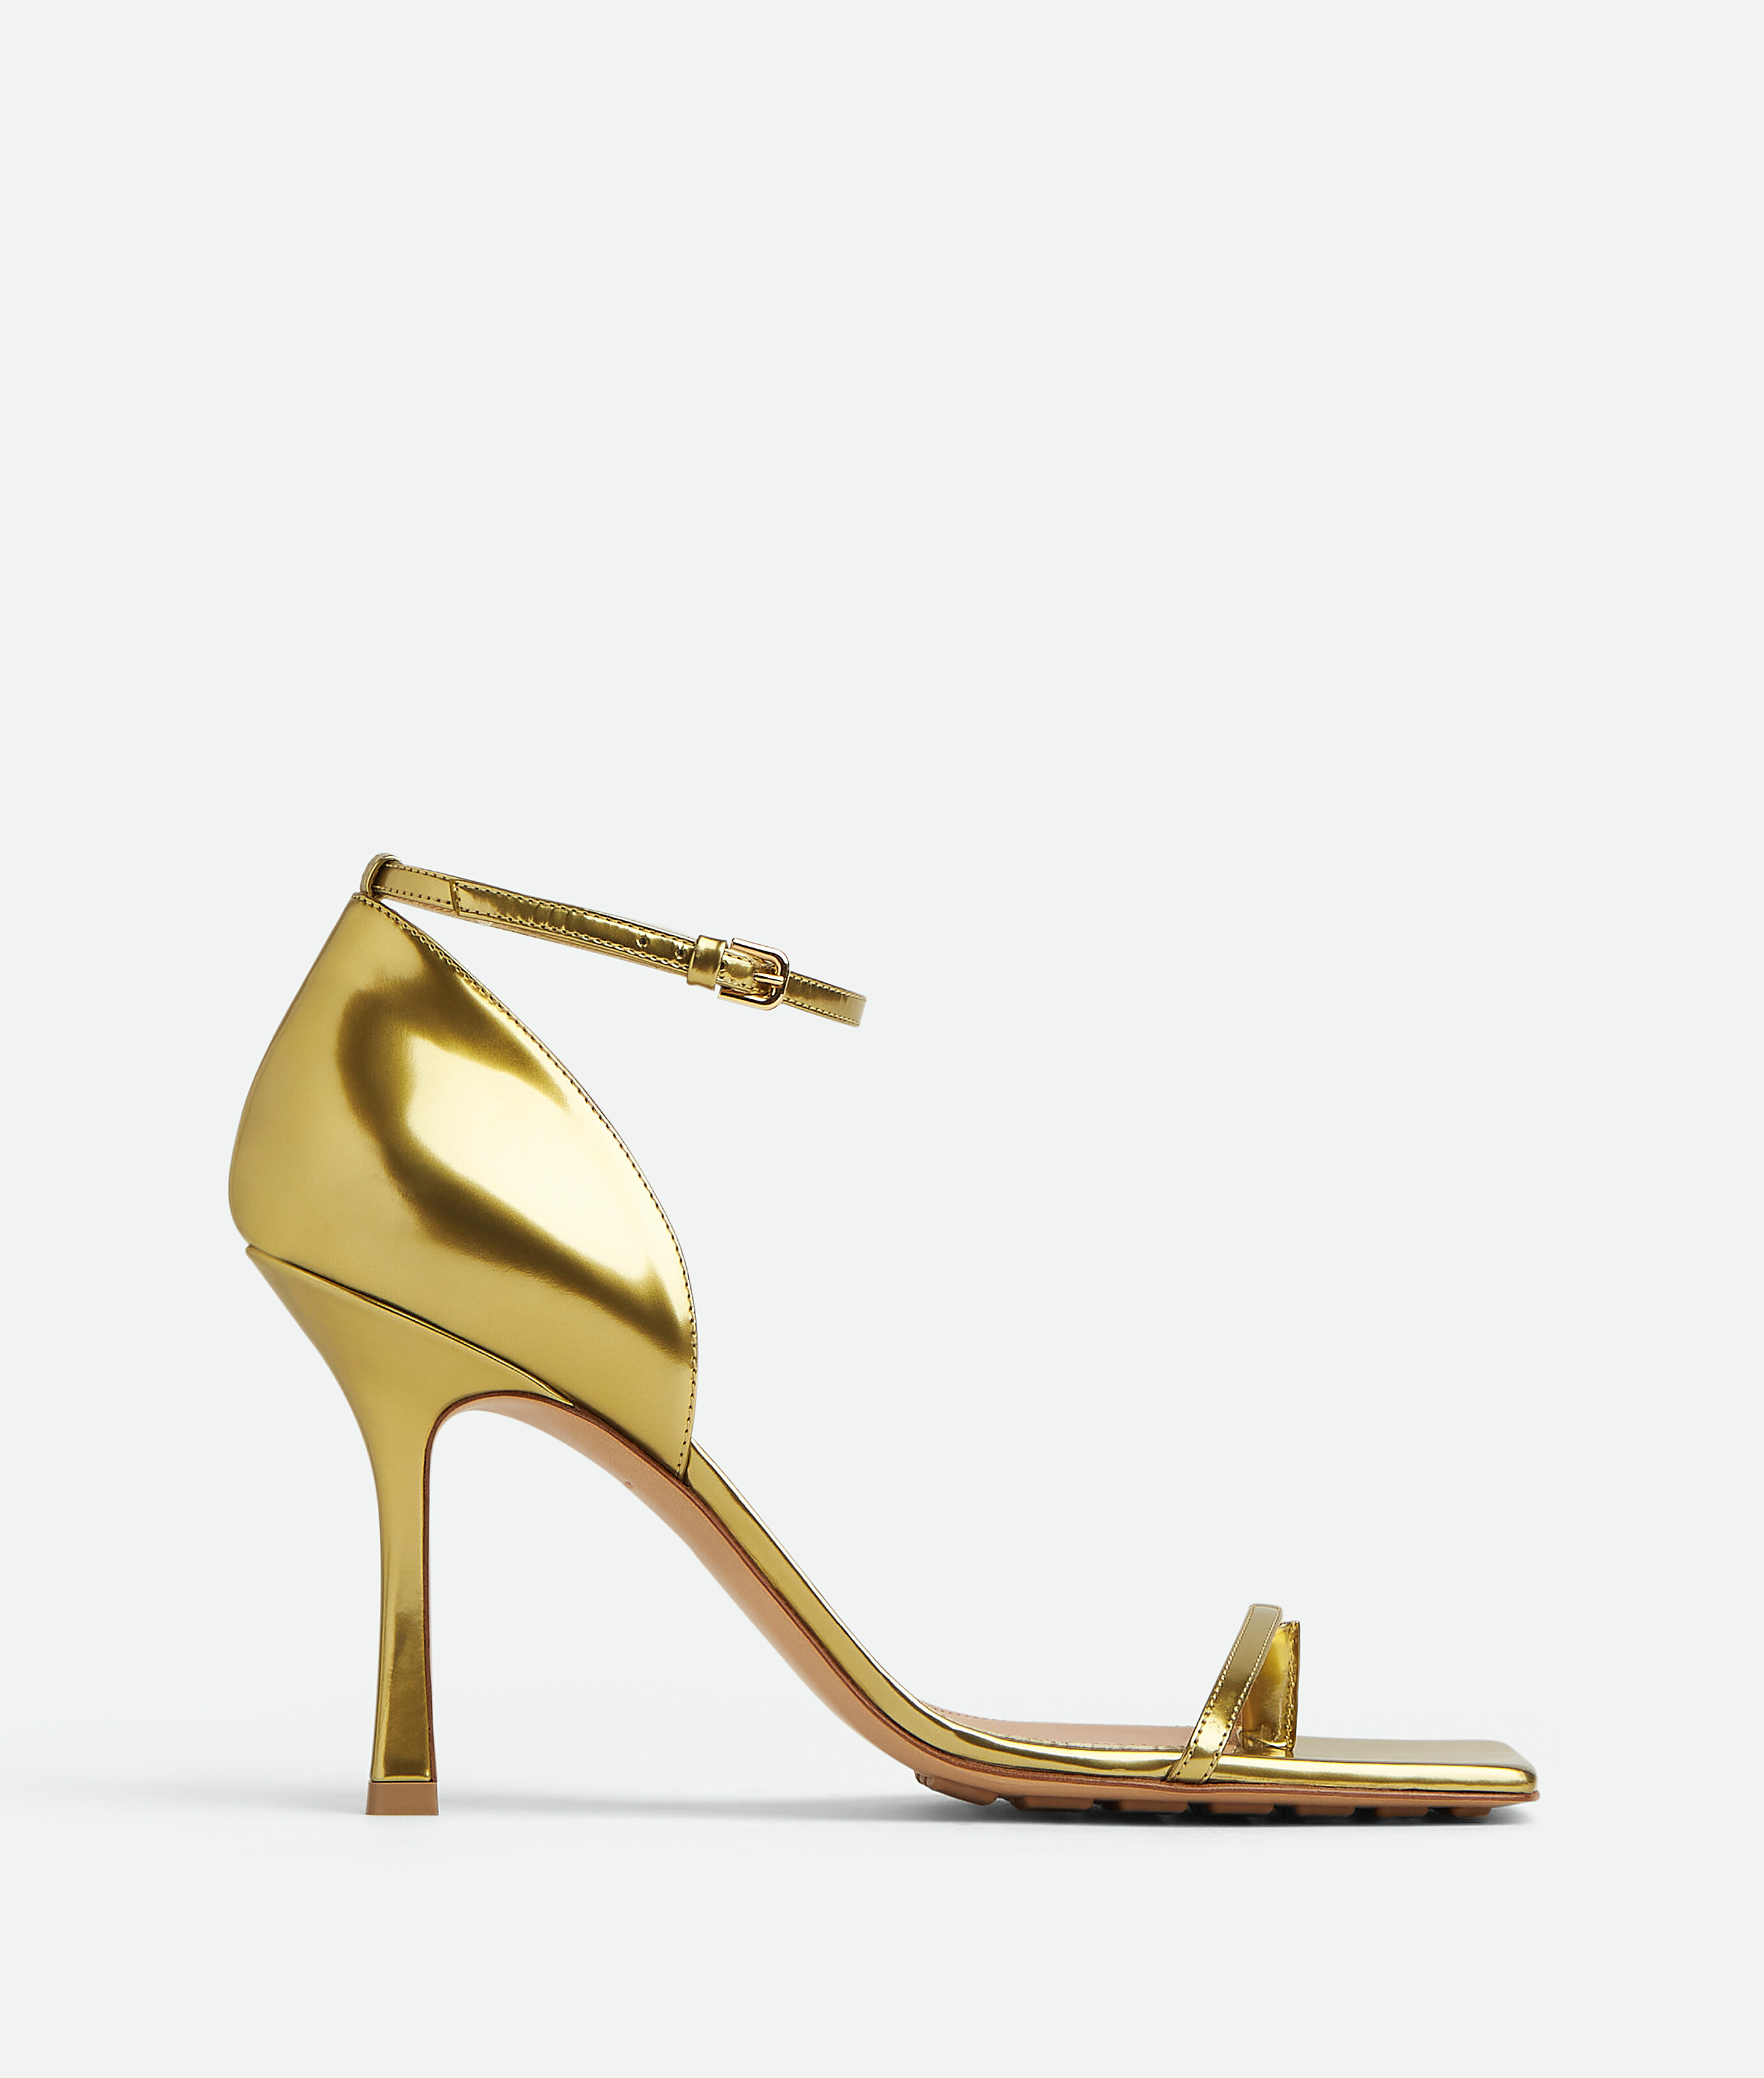 Bottega Veneta® Women's Stretch Strap Sandal in Gold. Shop online now.